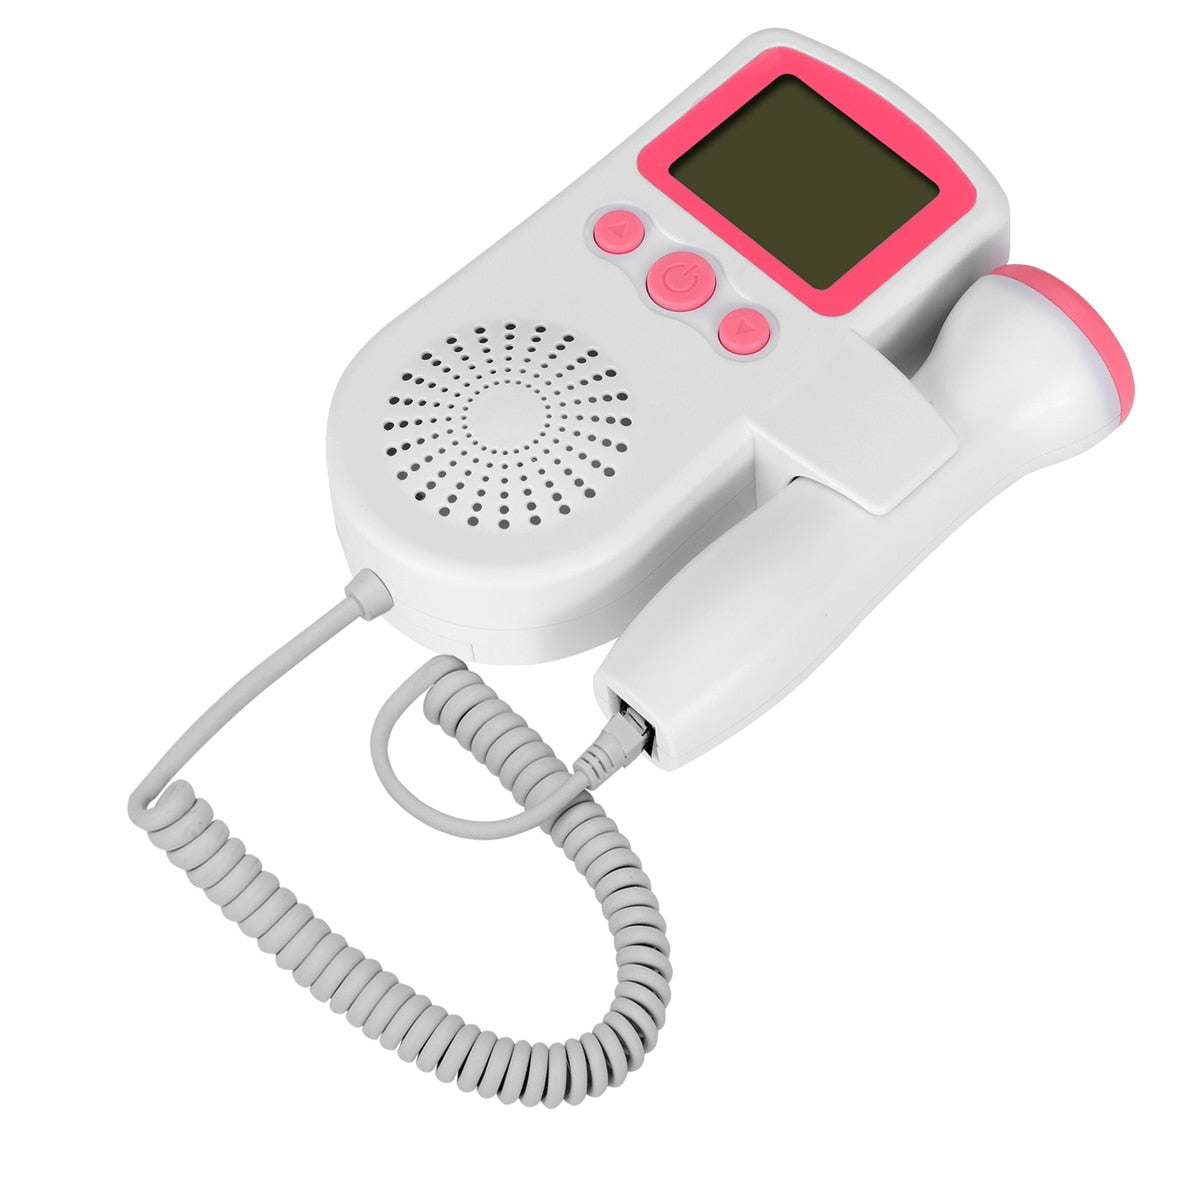 Upgraded 3.0MHz Prenatal Baby Heartbeat Monitor | Handheld Fetal Doppler